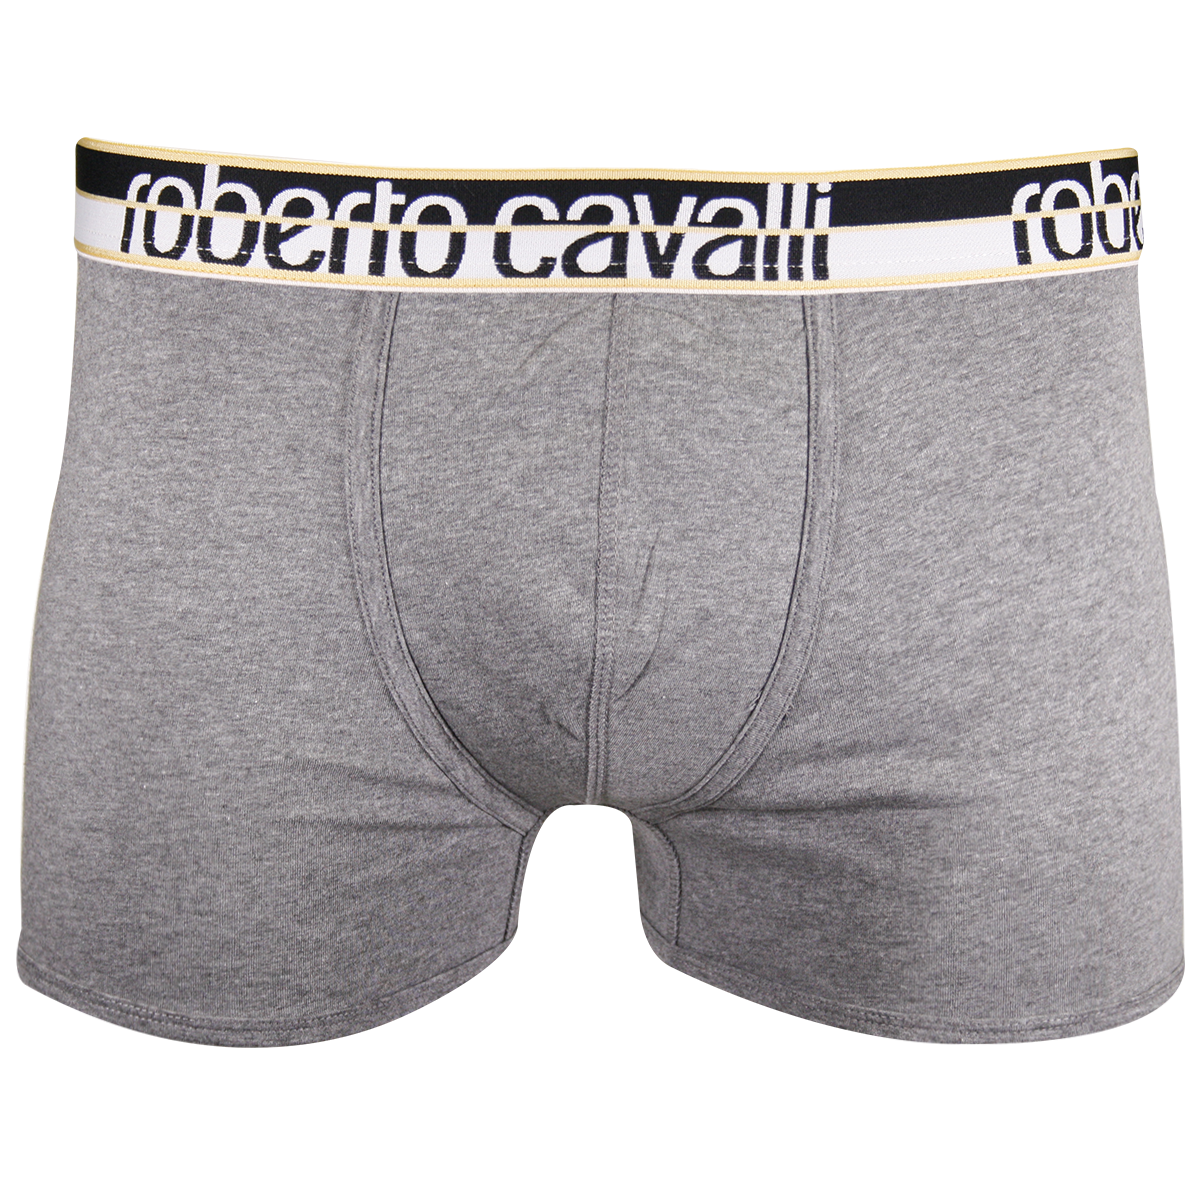 Roberto Cavalli Men's 2 Pack Grey Stretch Boxer Briefs